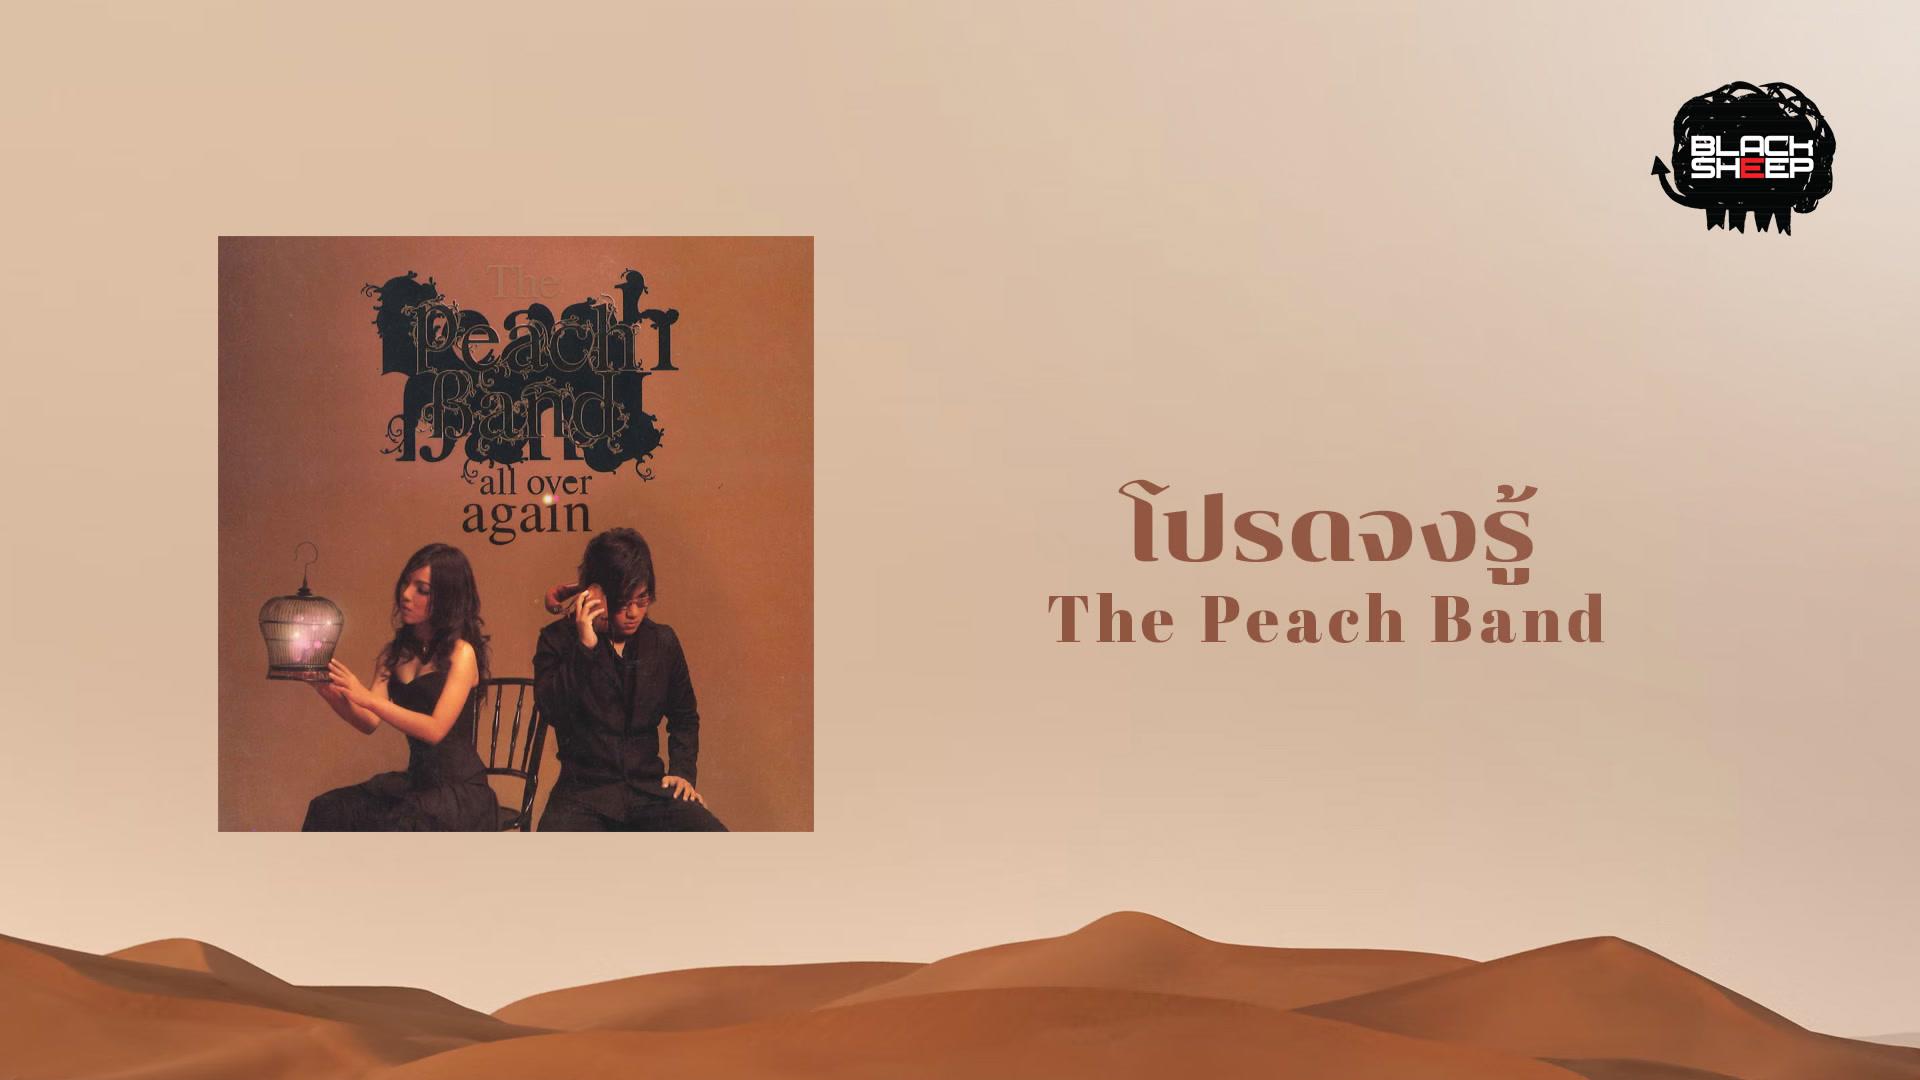 The Peach Band - โปรดจงรู้ (Please)